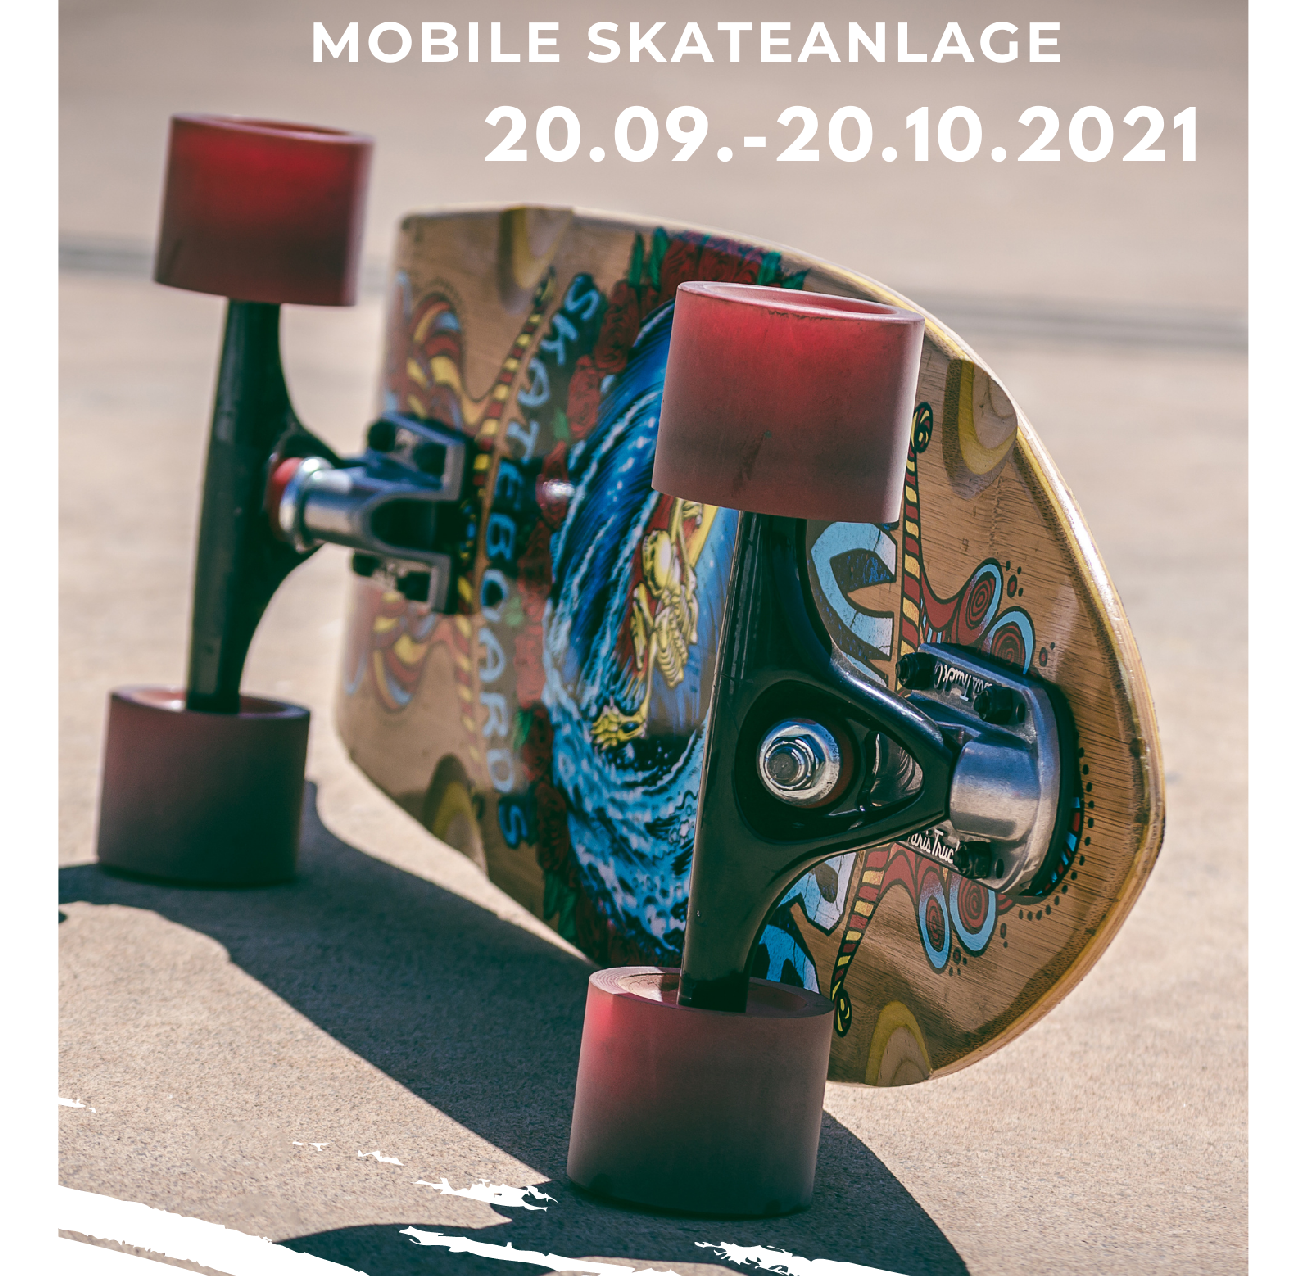 Mobile Skateanlage